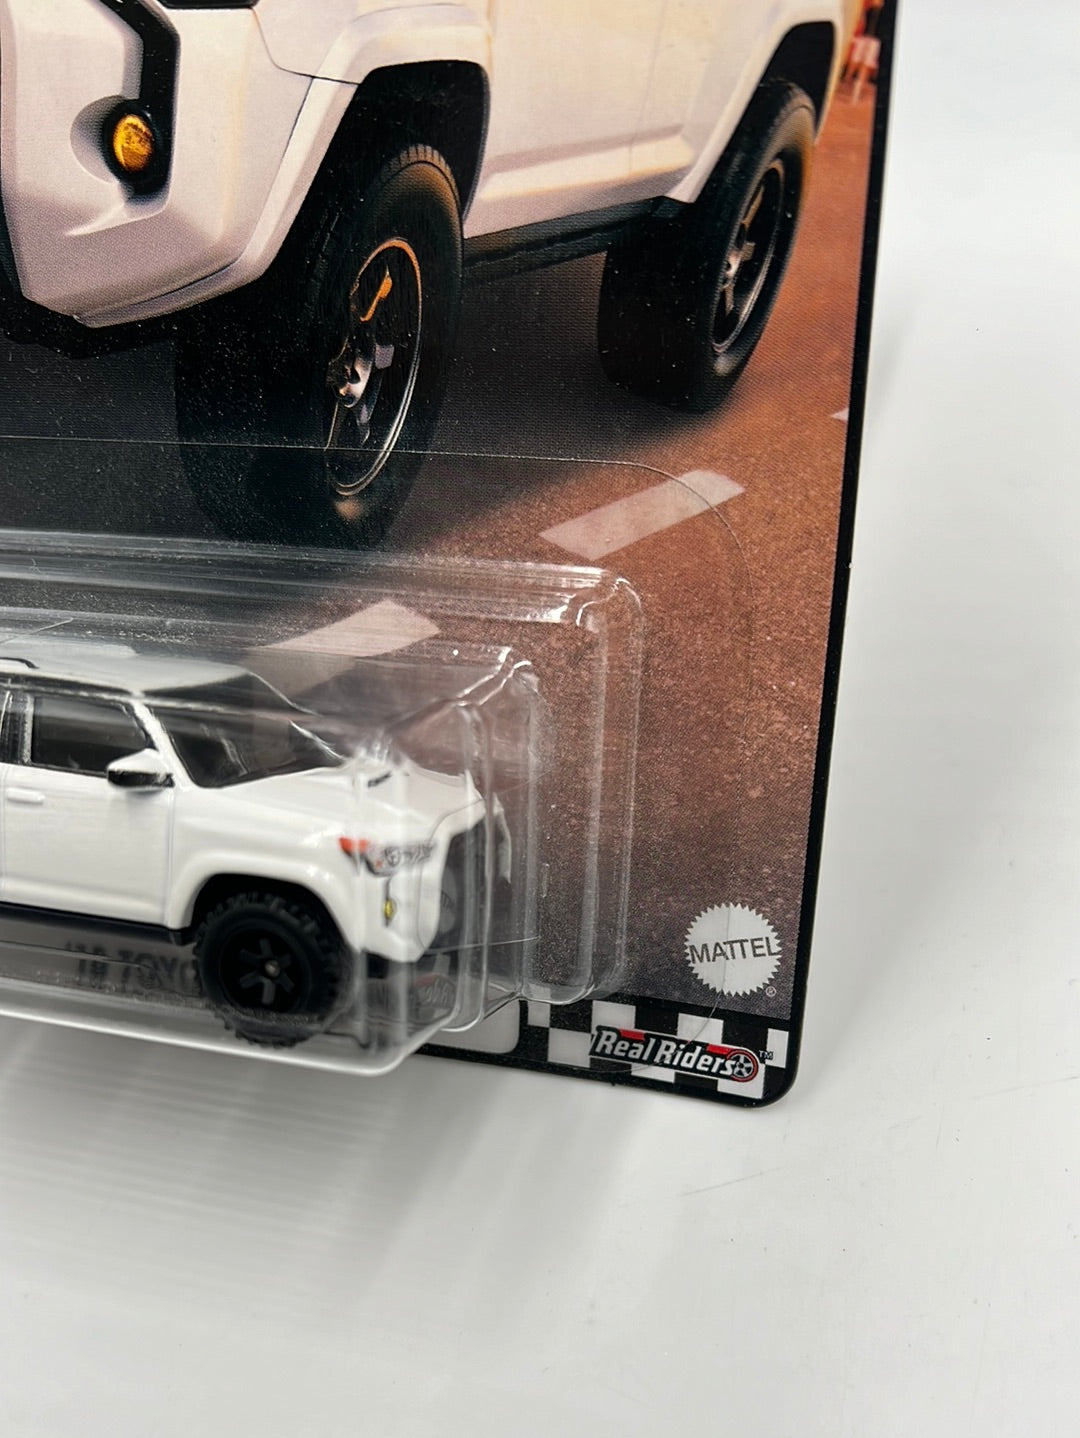 Hot Wheels Premium Boulevard #36 ‘18 Toyota 4Runner White